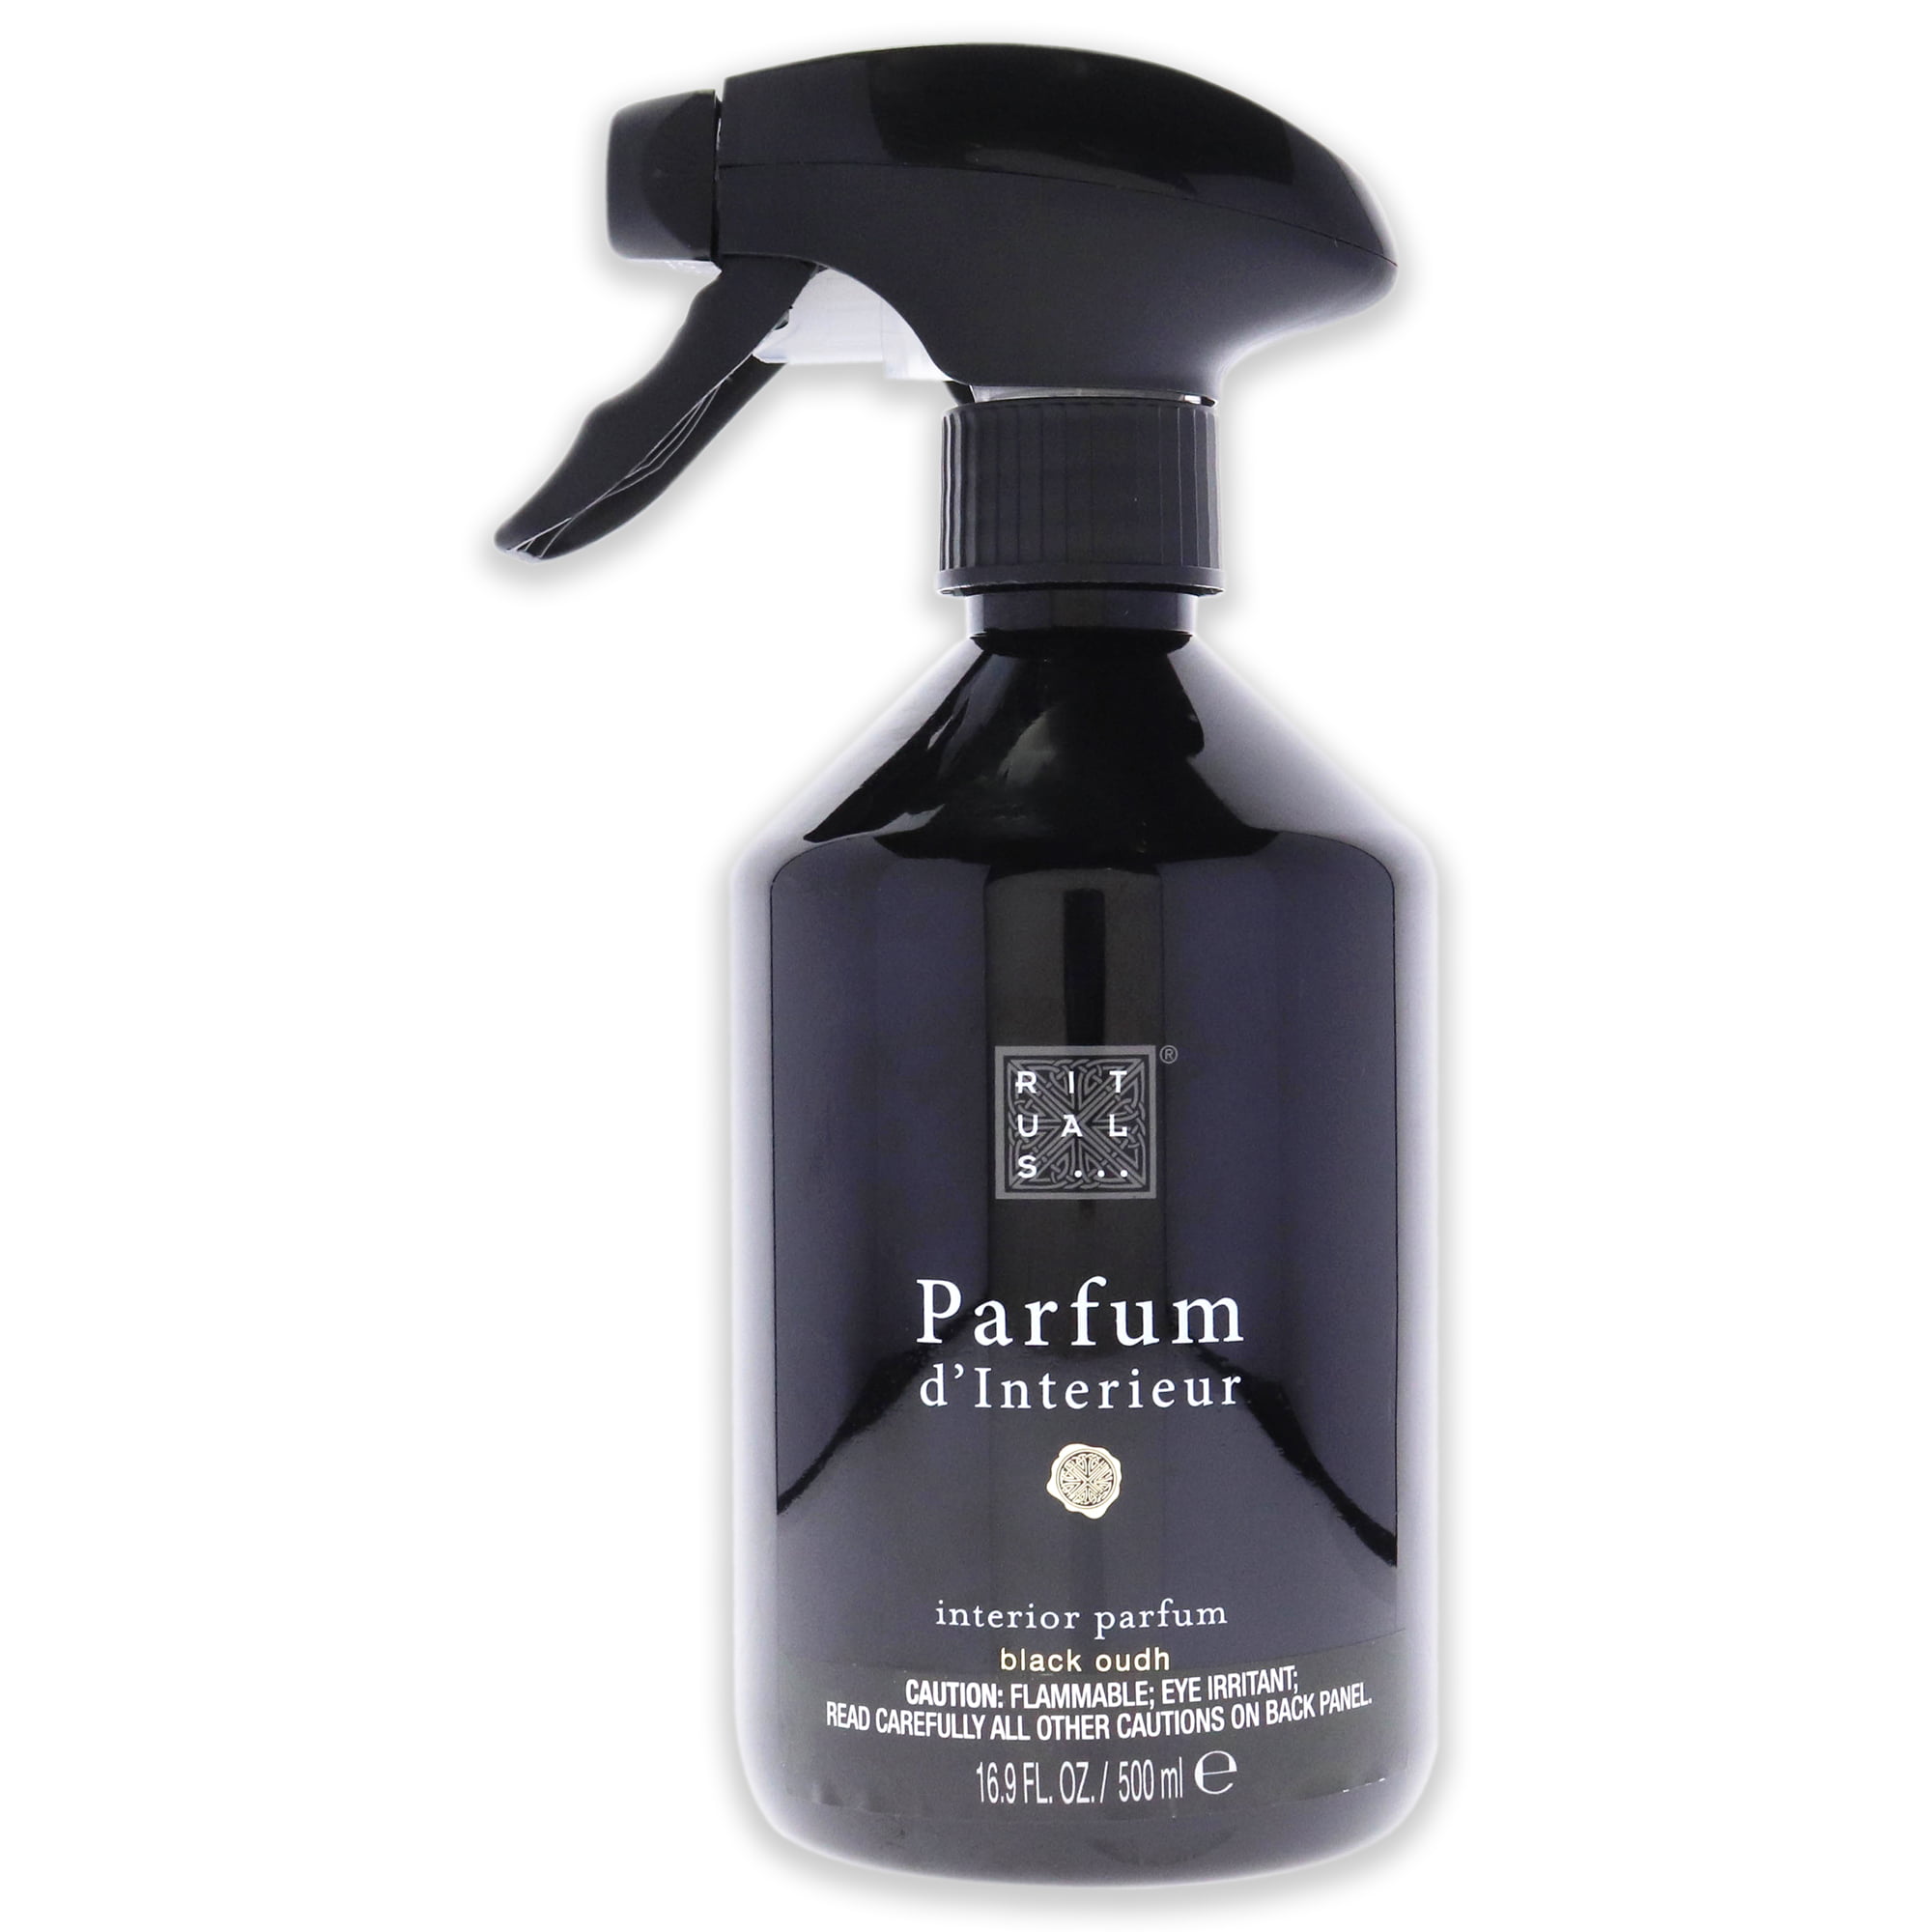 camouflage Bekend korting Rituals Black Oudh Parfum dInterieur, 16.9 oz Room Spray - Walmart.com